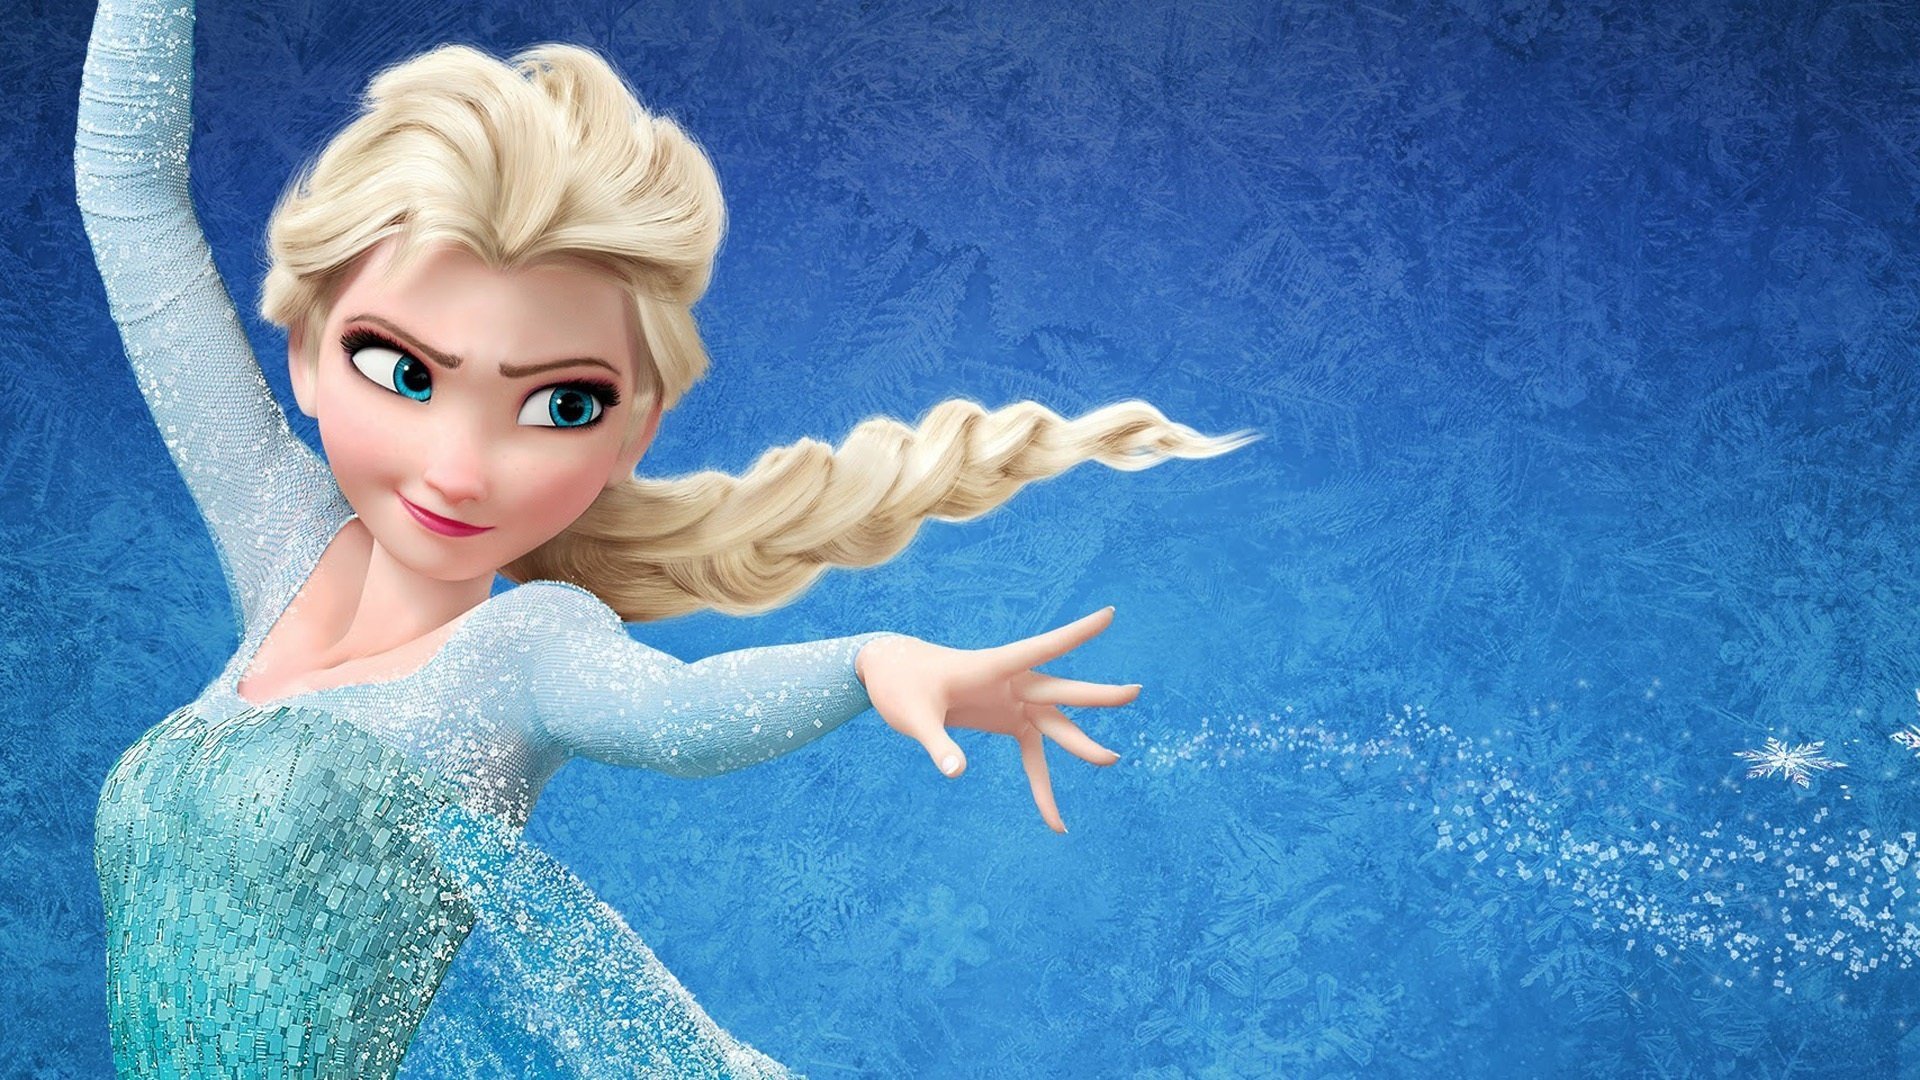 Frozen 2 release date trailer poster plot